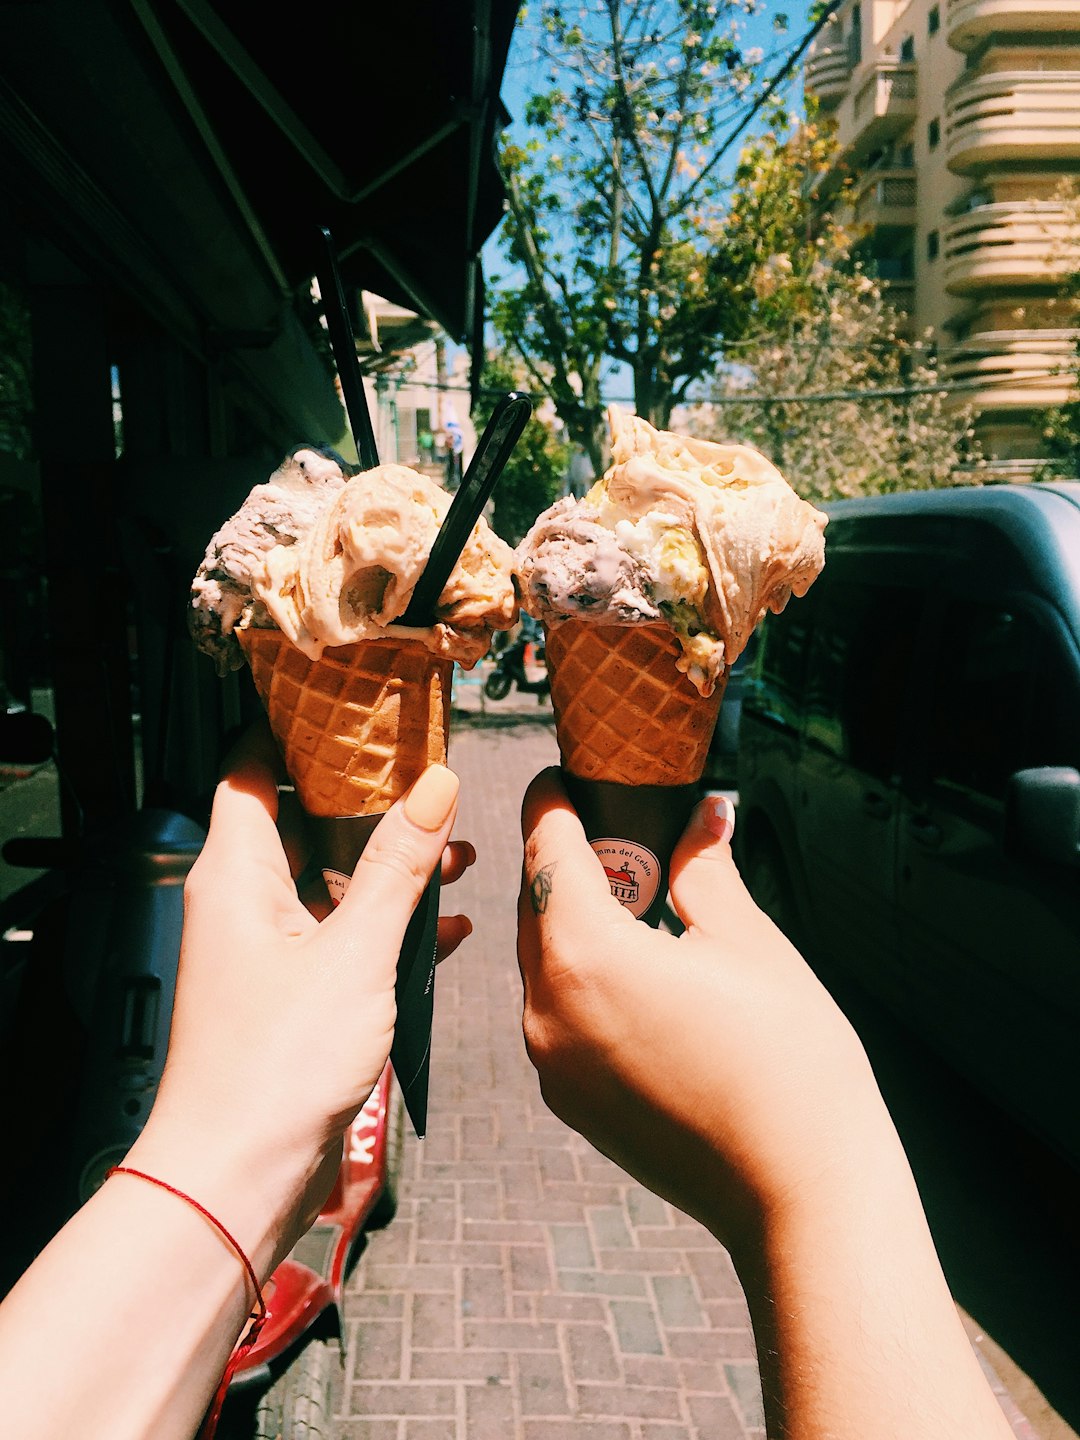 two cones of ice creams photo – Free Florentin st 5 Image on Unsplash